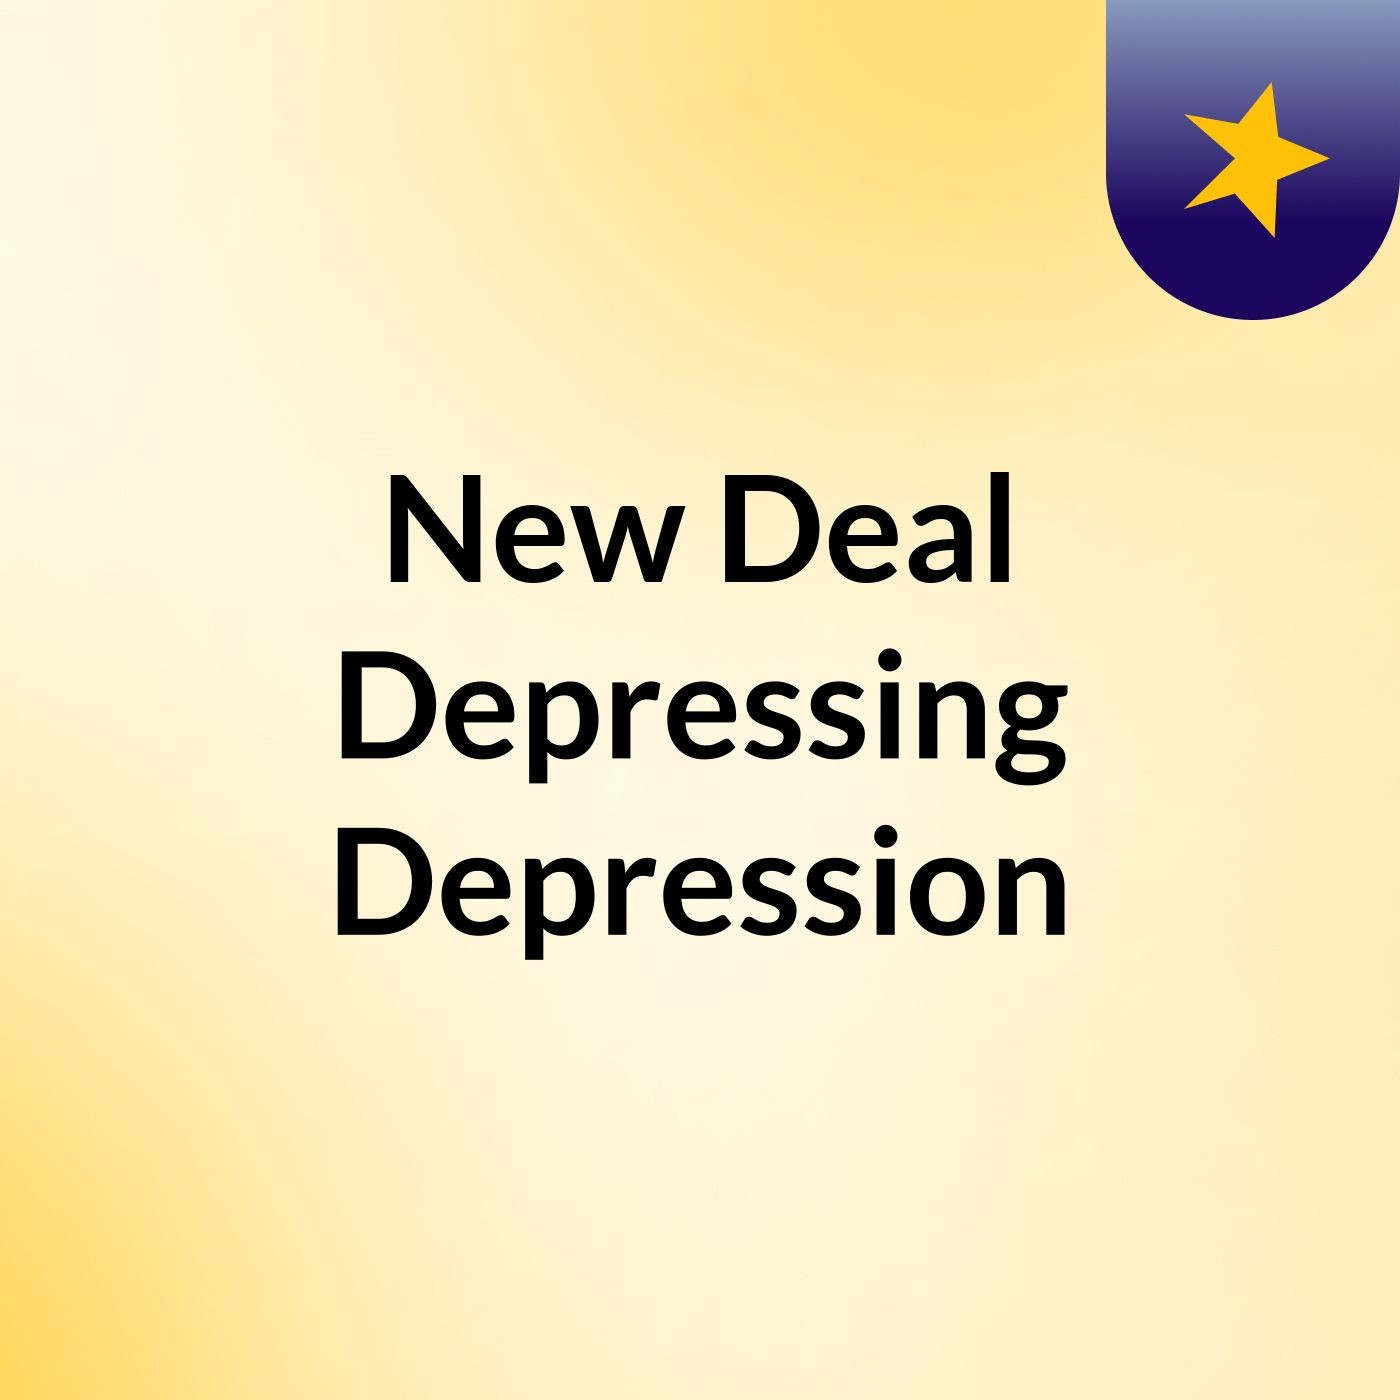 New Deal: 'Depressing' Depression